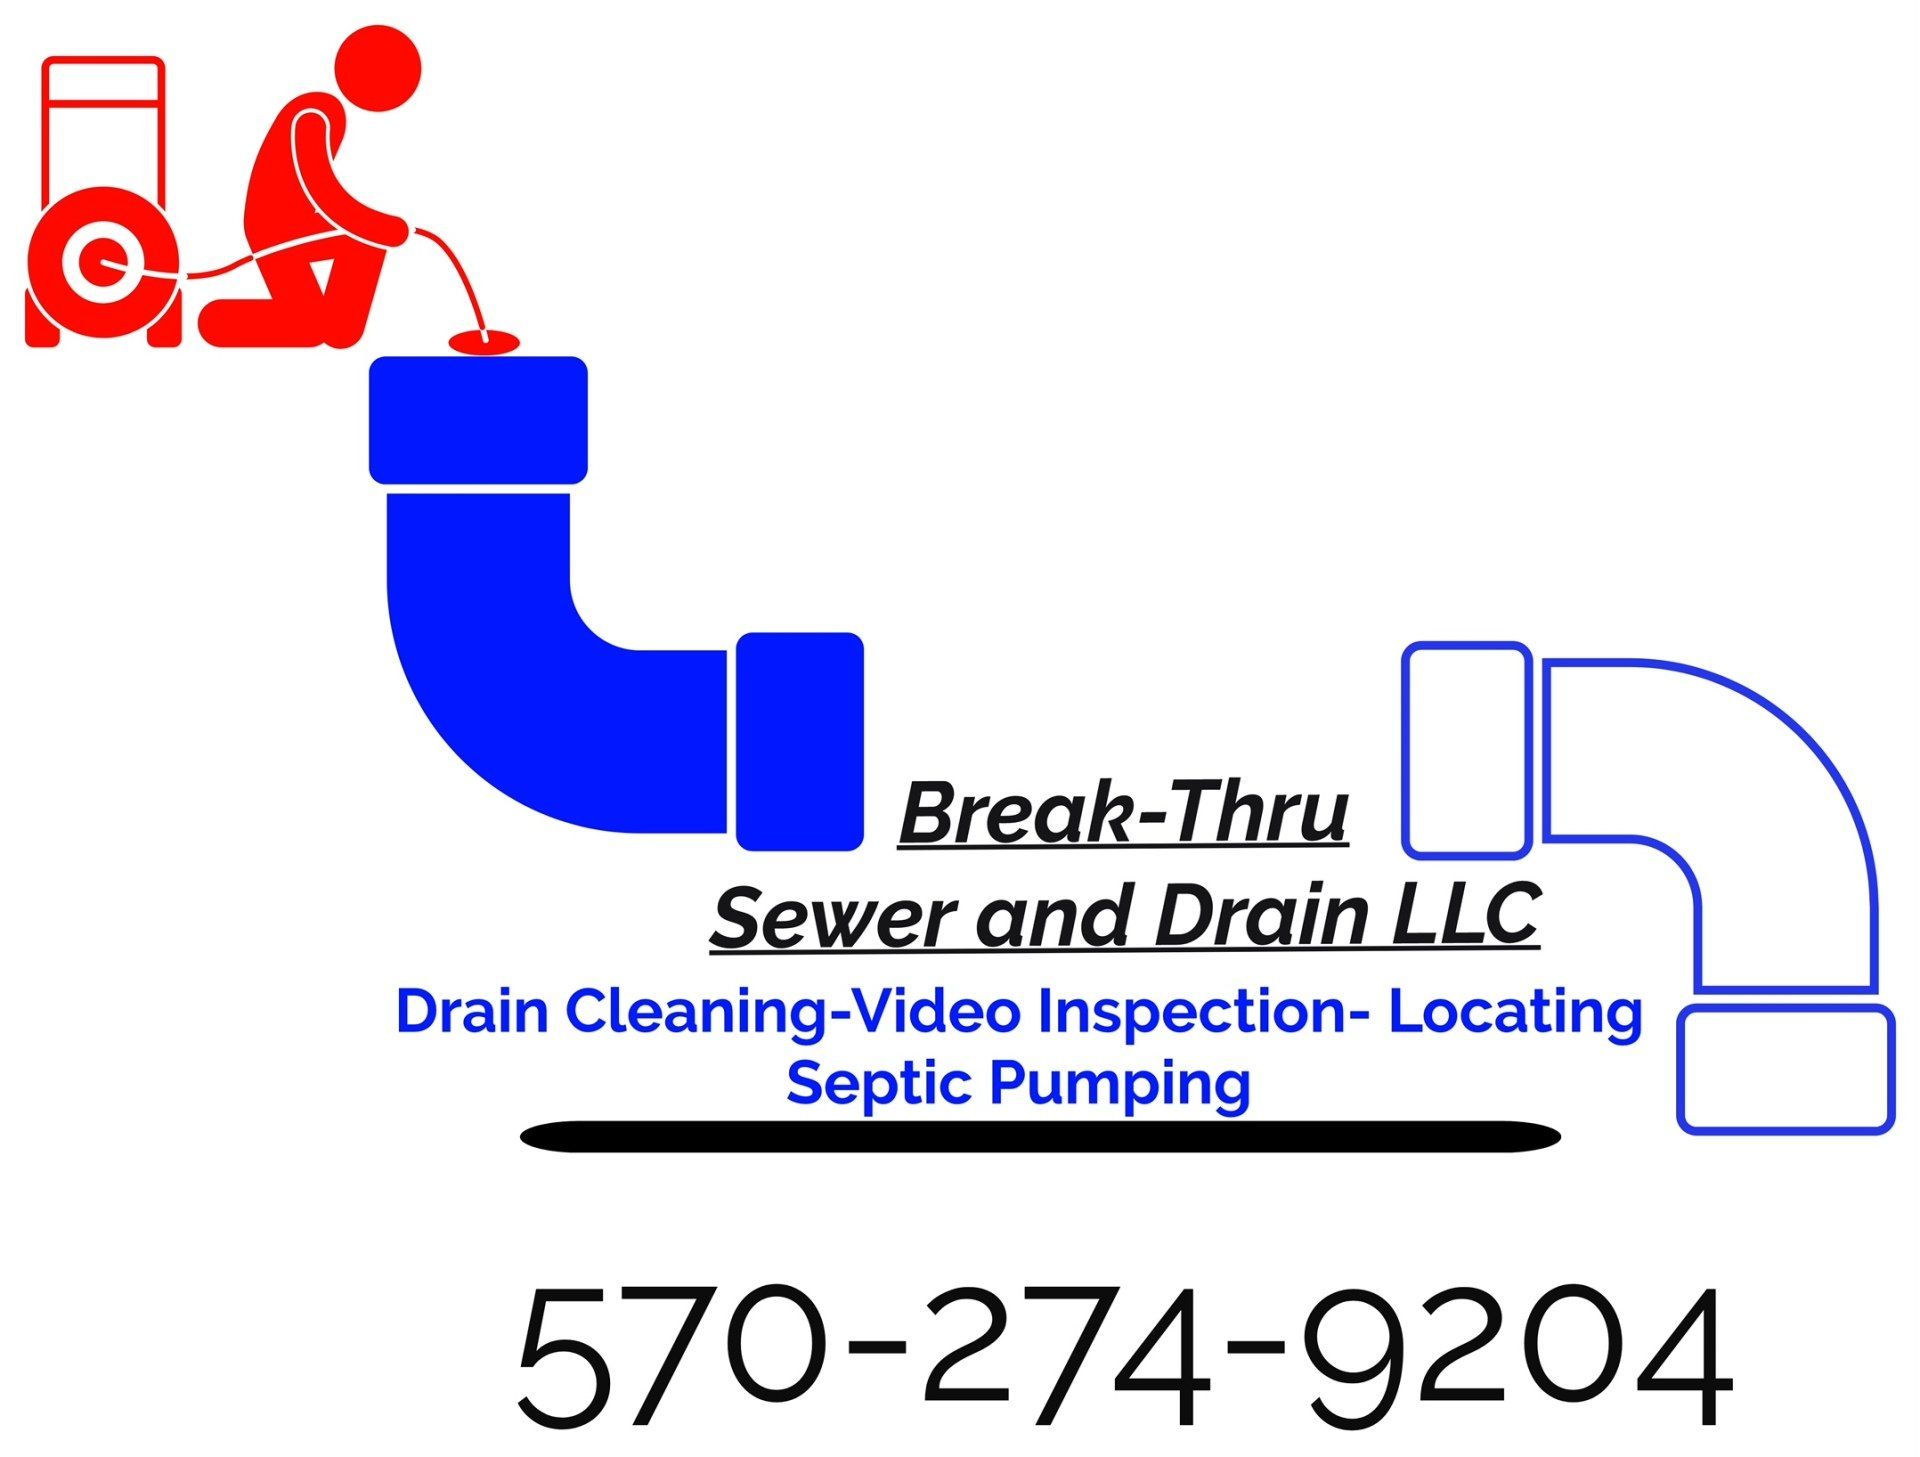 Break-Thru Sewer and Drain LLC